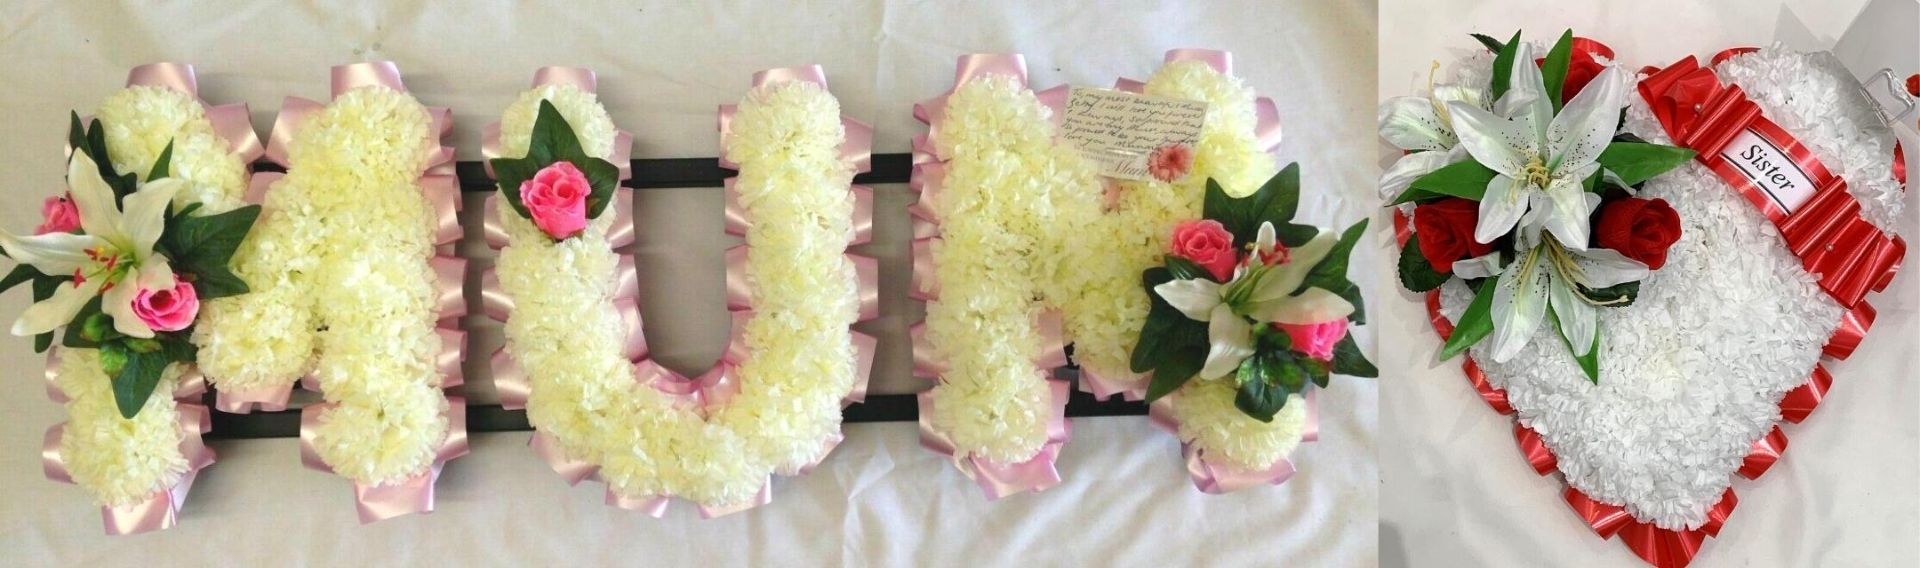 MUM Artificial Silk Funeral Flower Package Name Flower Wreath DAUGHTER SISTER